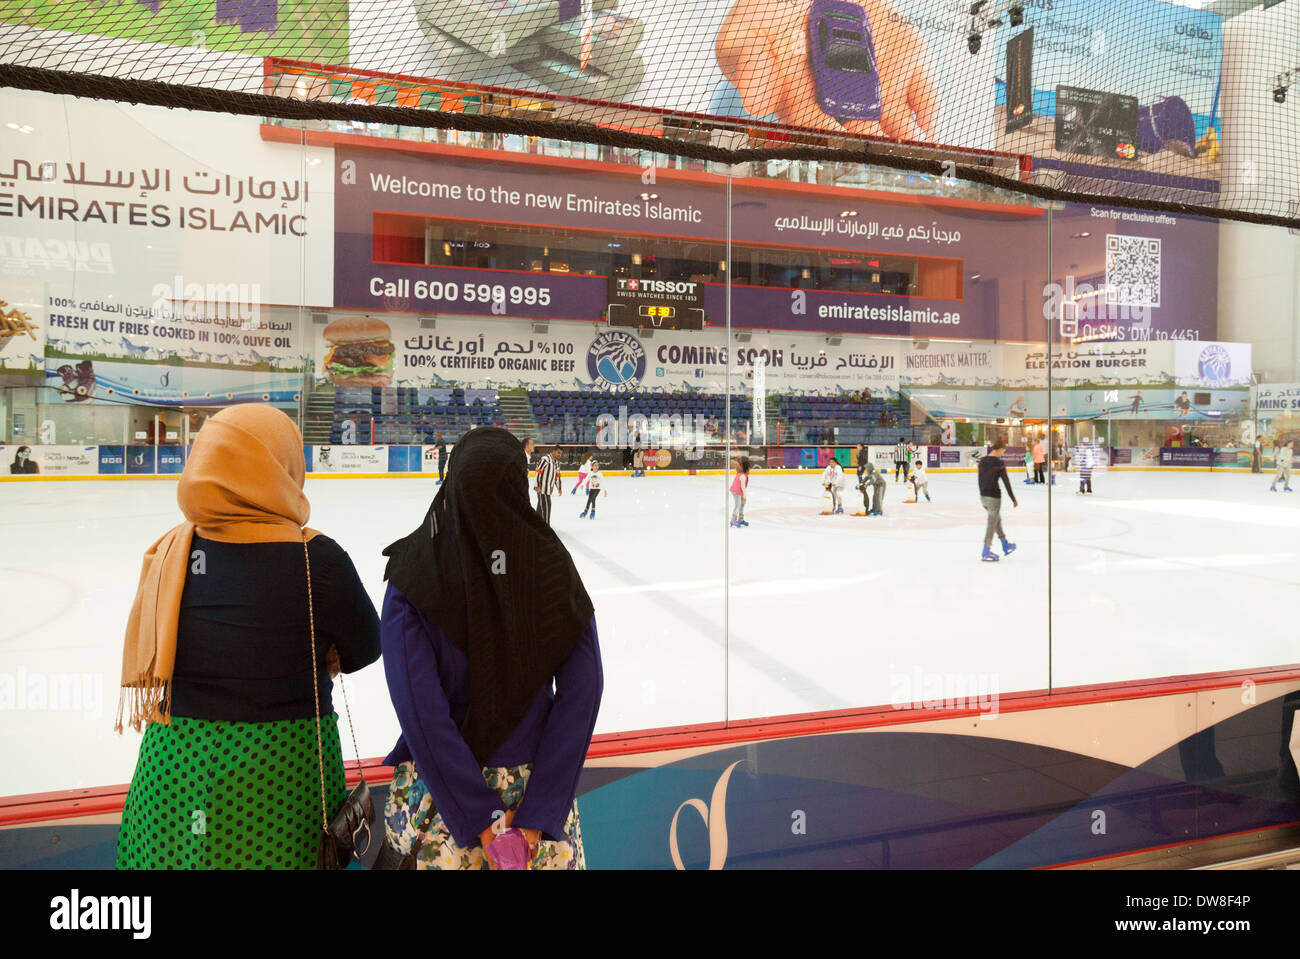 Zwei muslimische Frauen Leute skaten zu beobachten; die Dubai Mall Eisbahn, Dubai Mall, Dubai, Vereinigte Arabische Emirate, Vereinigte Arabische Emirate Naher Osten Stockfoto